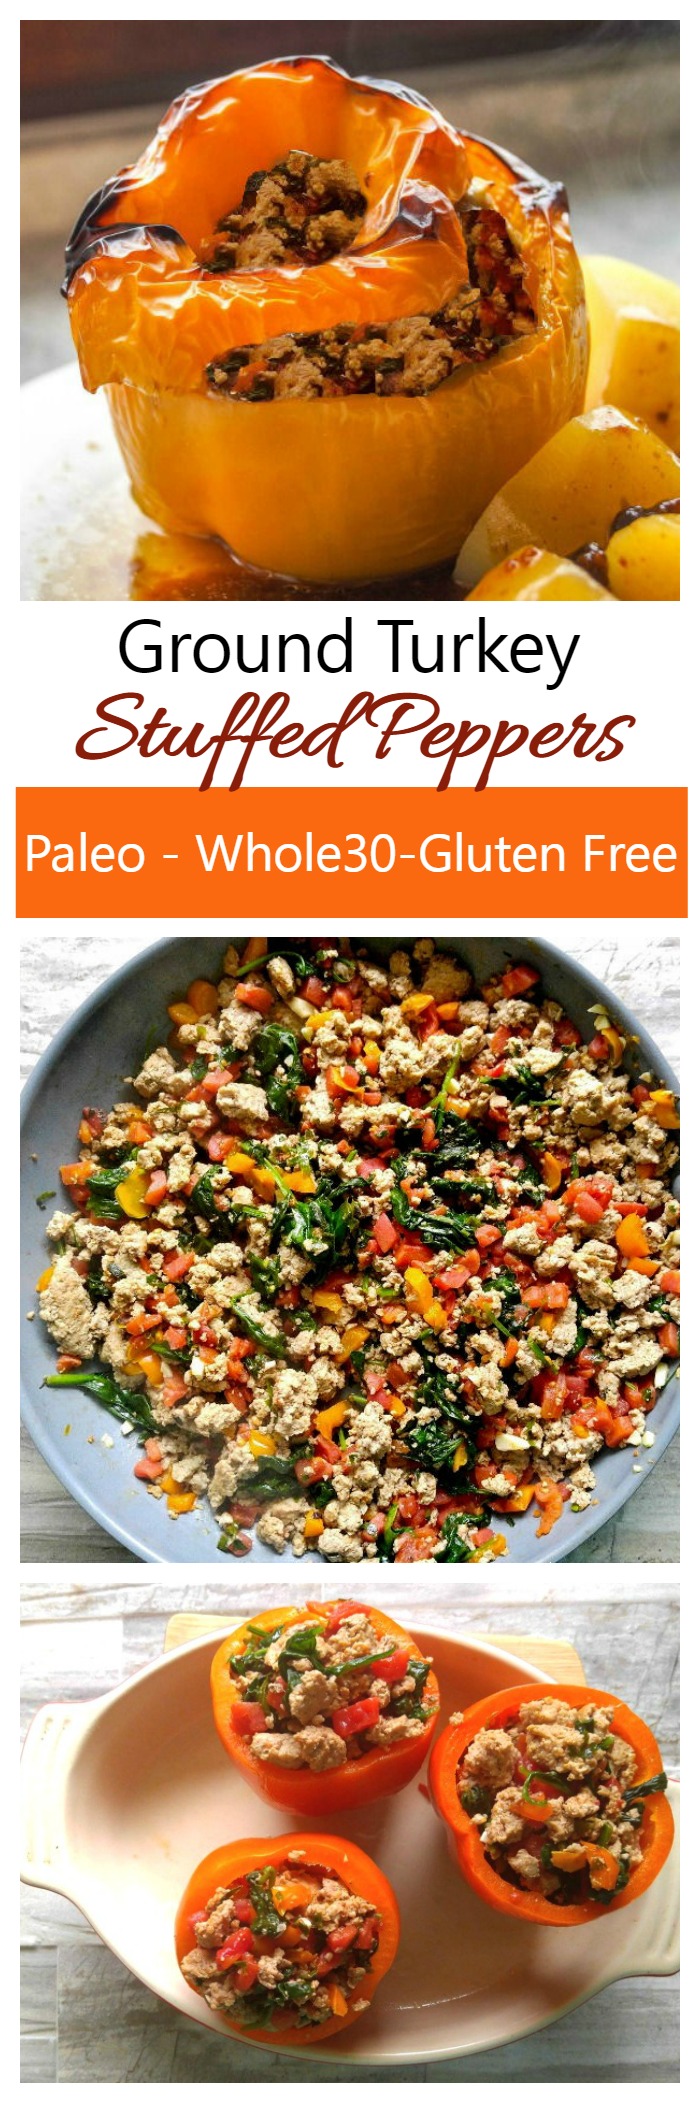 Turkey Stuffed Peppers - Paleo - Whole30 - Gluten Free